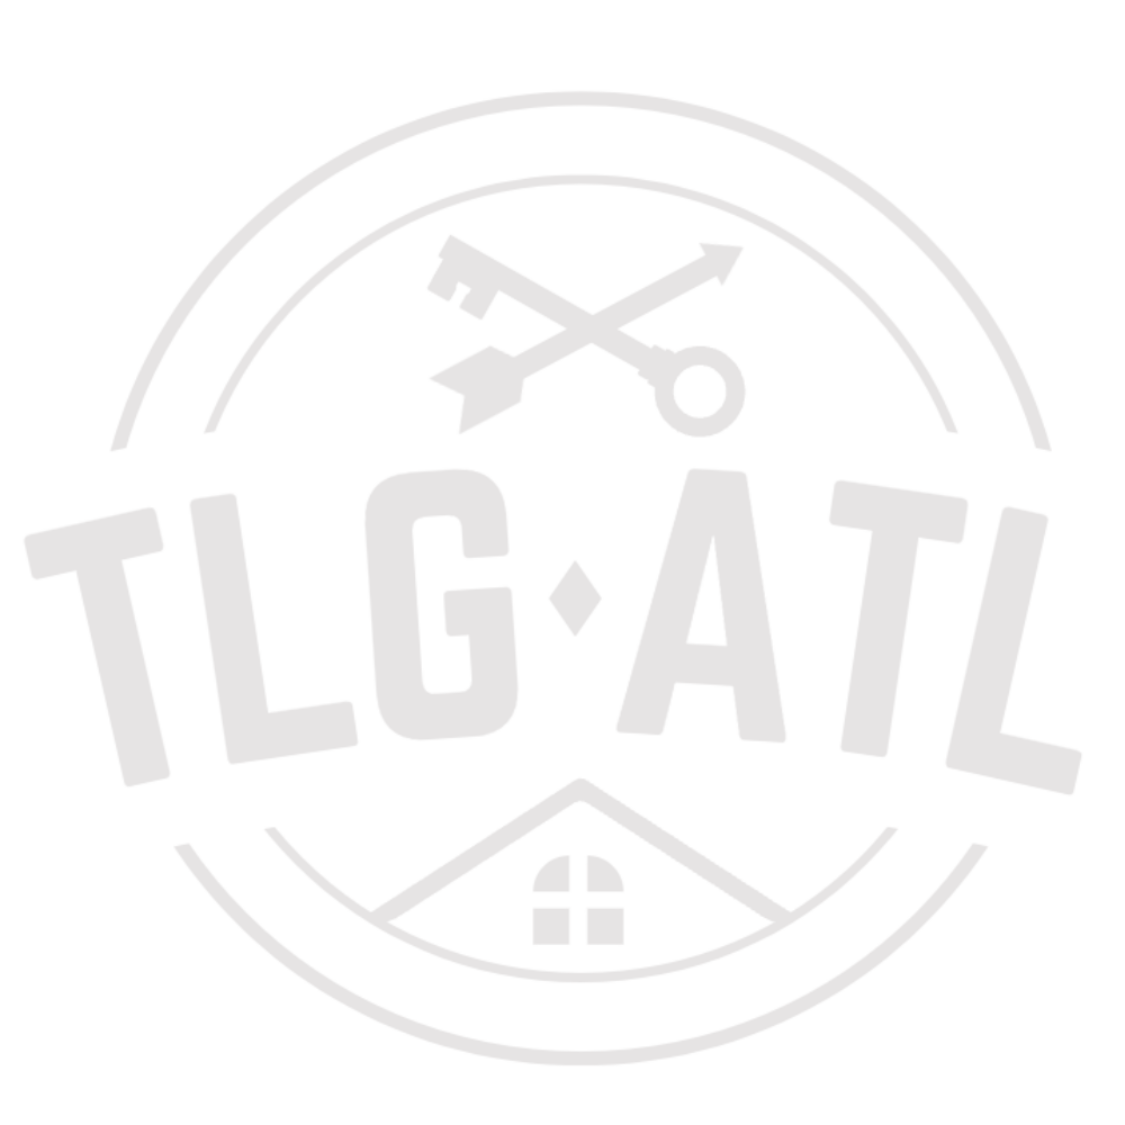 TLG-ATL real estate logo